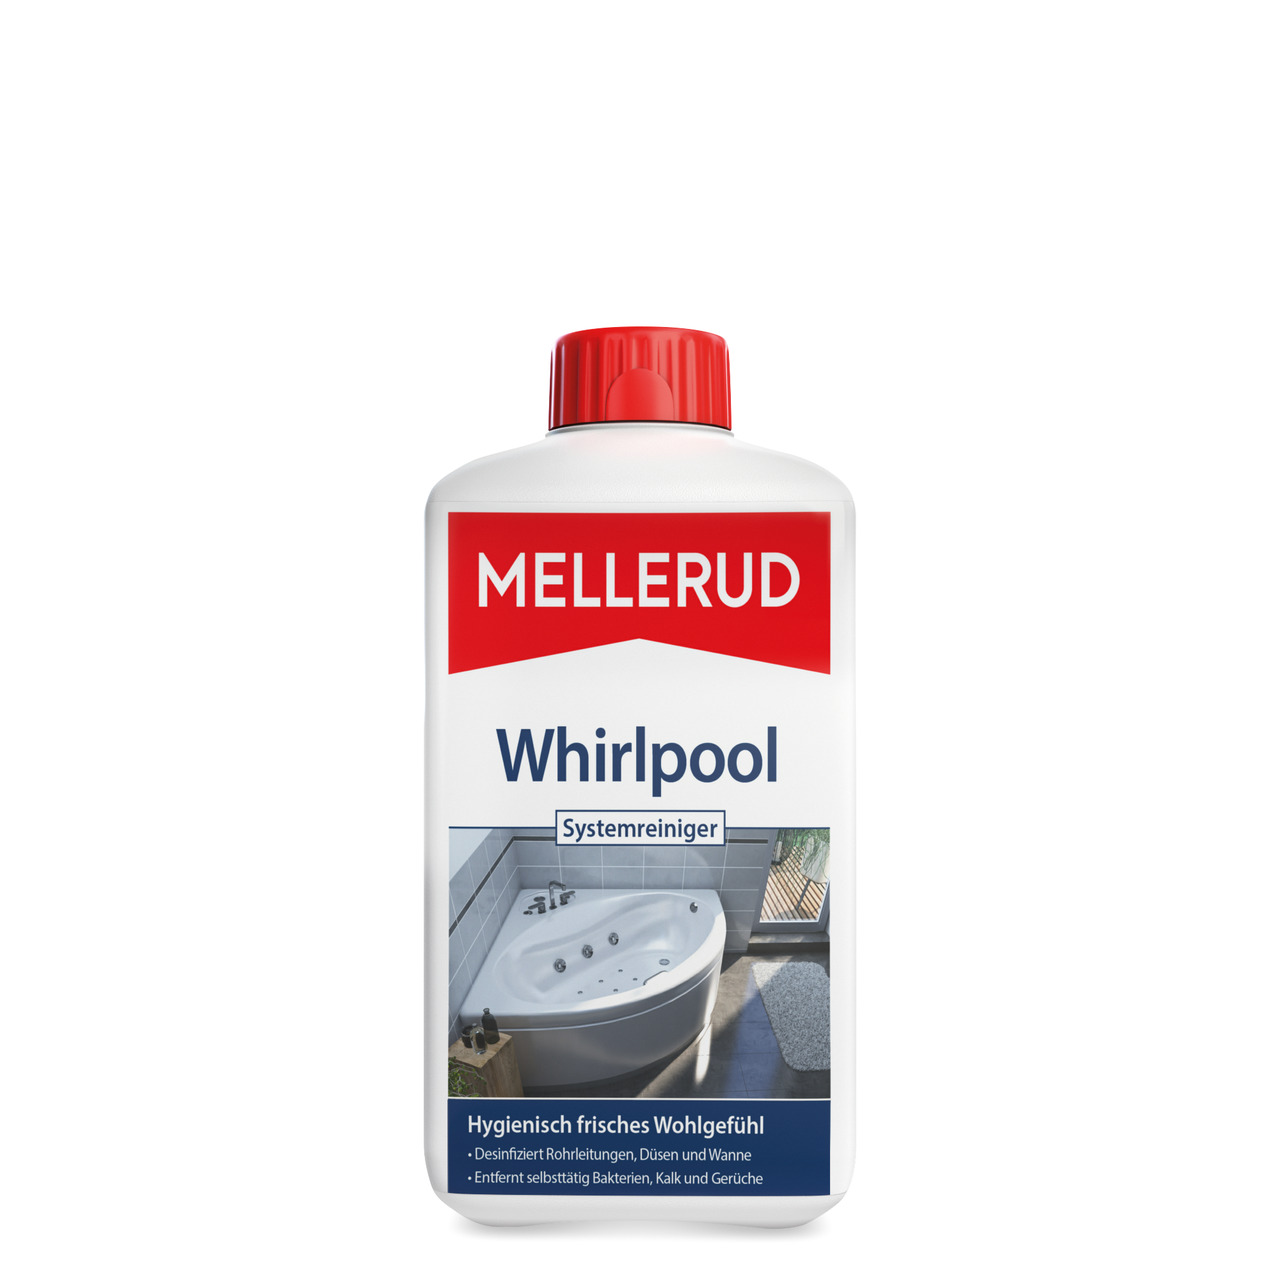 Whirlpool Systemreiniger 1,0 l